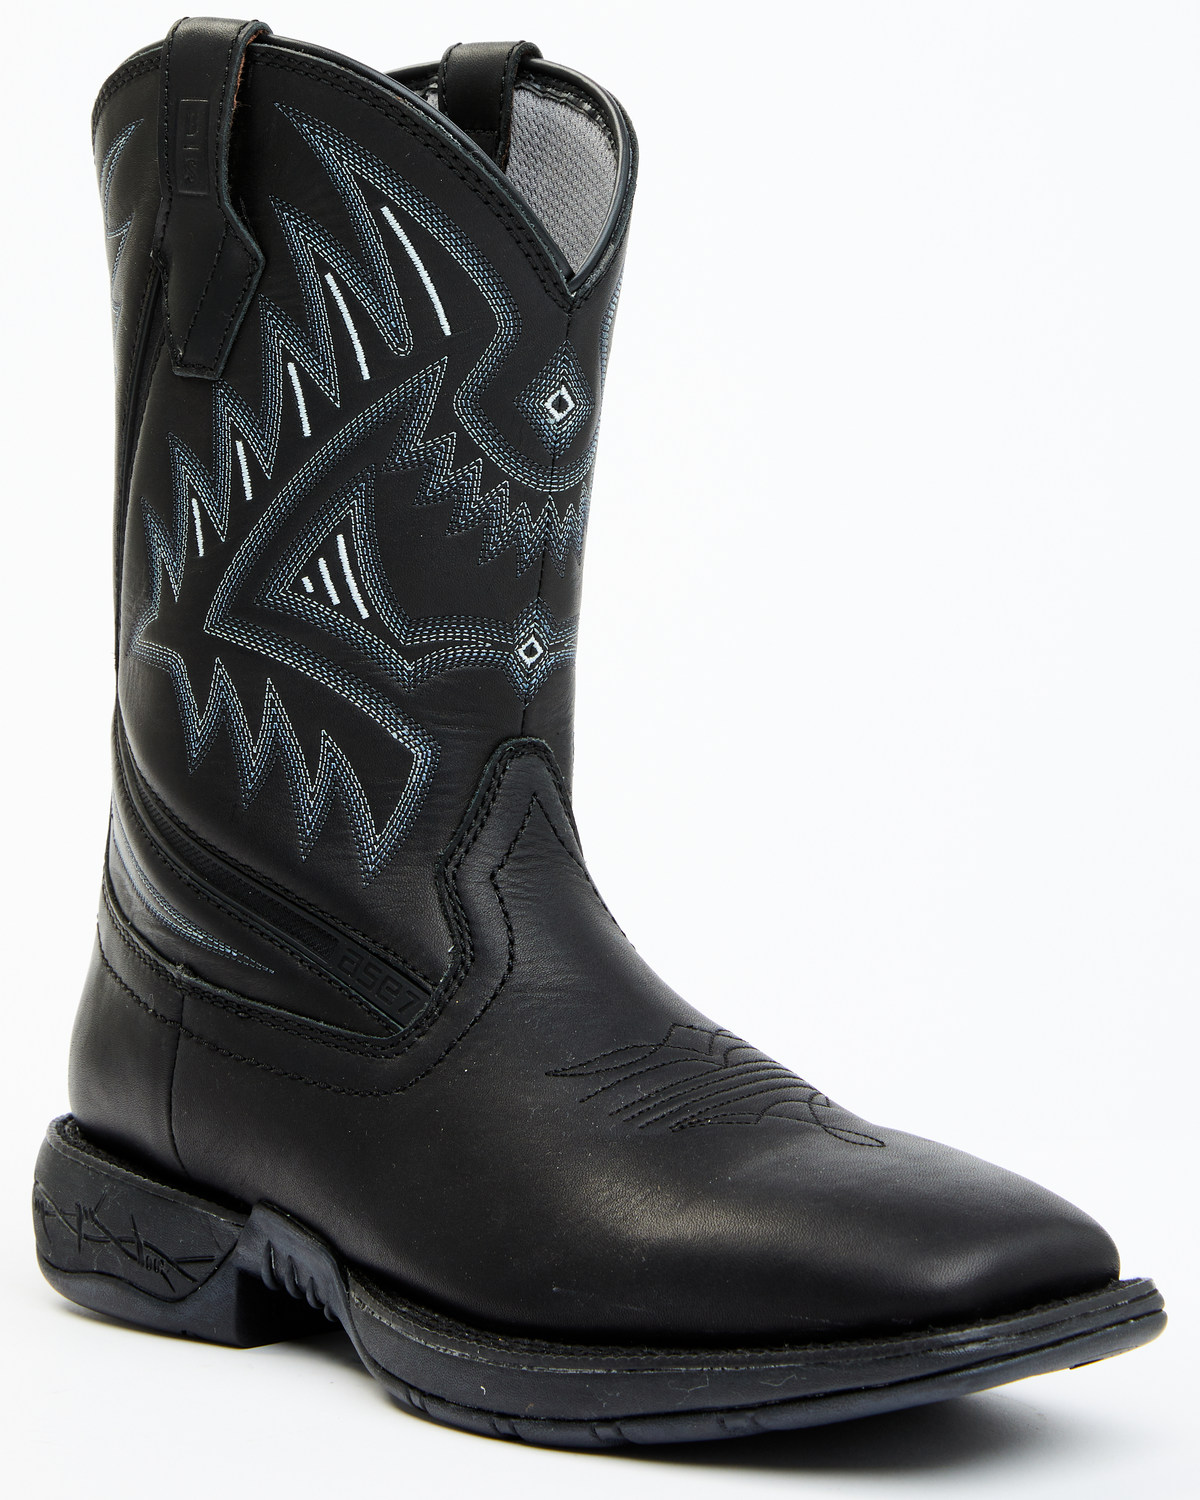 Cody James Men's Xero Gravity Lite Western Performance Boots - Broad Square Toe